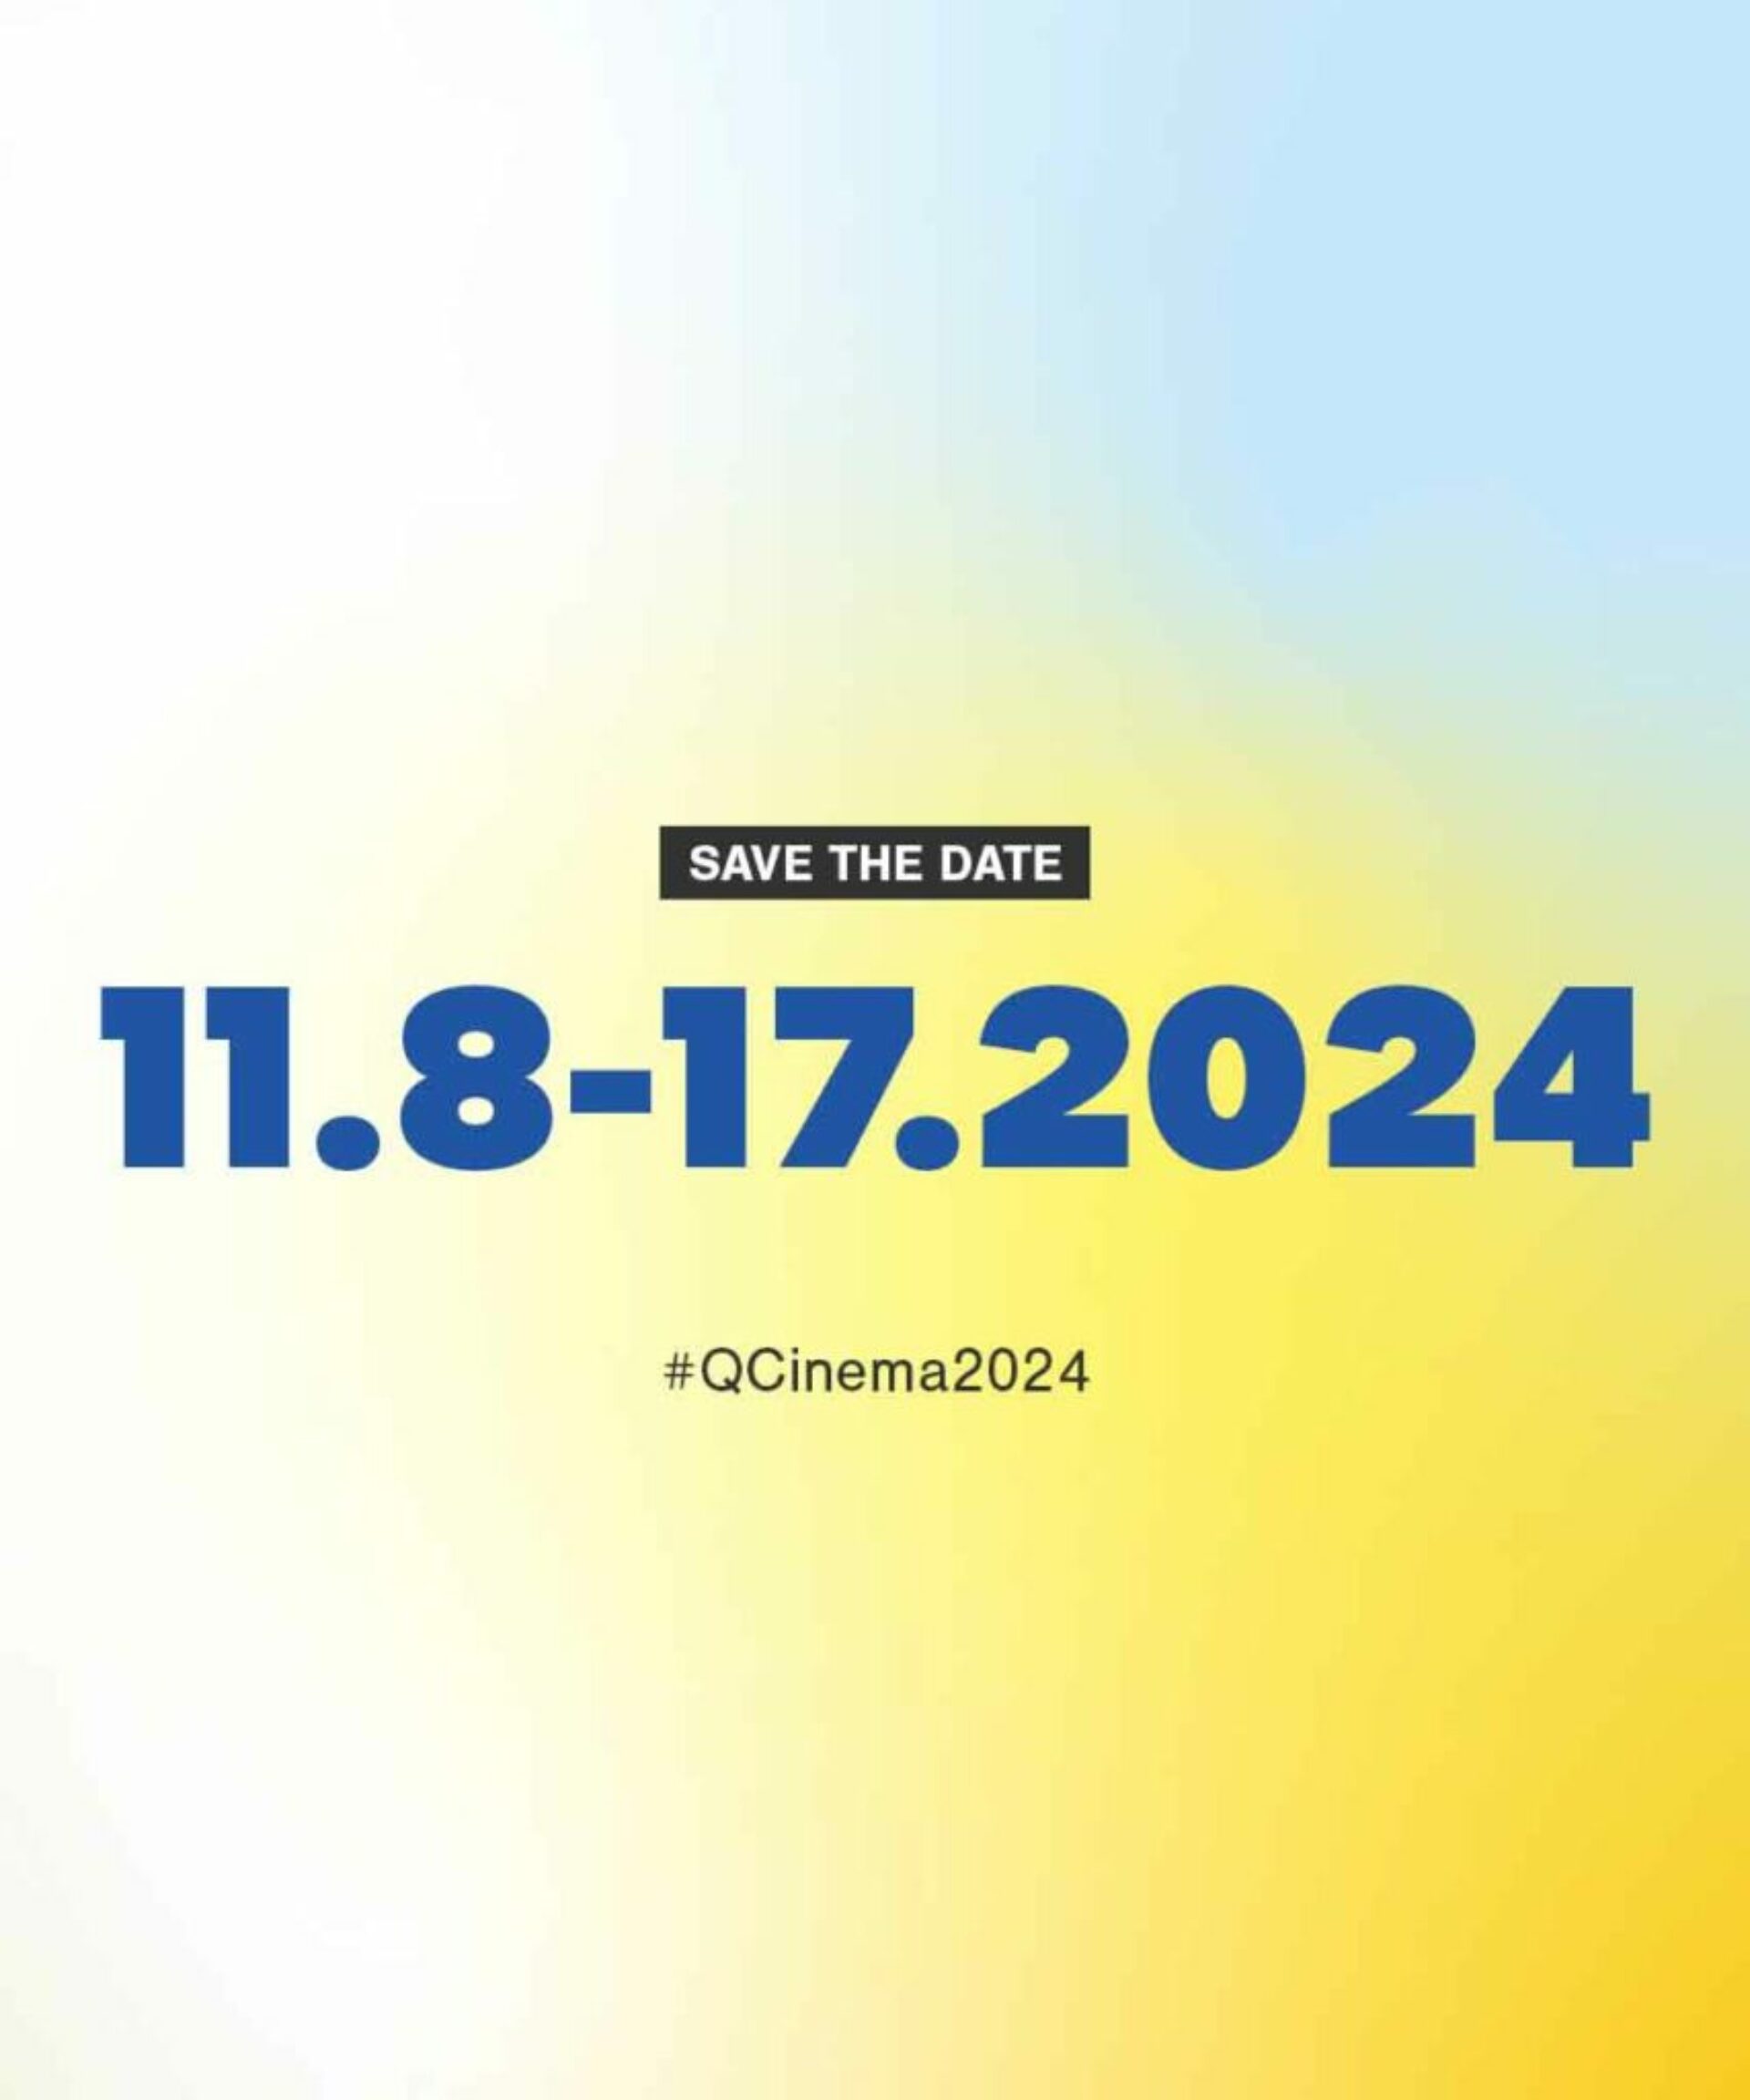 QCinema will be held on Nov 8-17, 2024